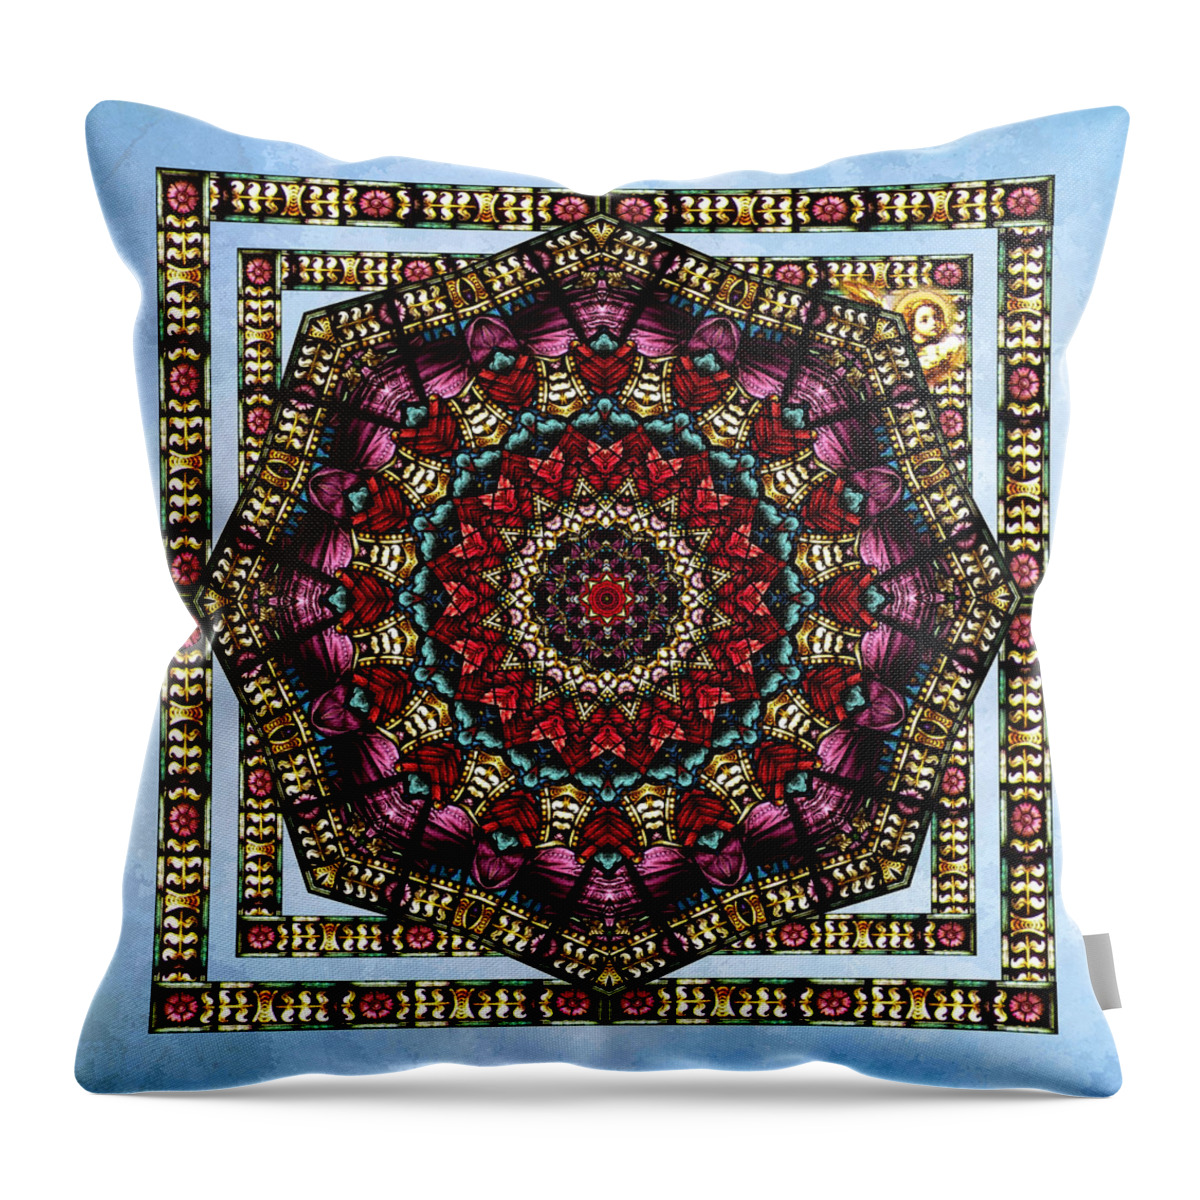 stained Glass Throw Pillow featuring the digital art Cherub Window Kaleidoscope by Deborah Smith